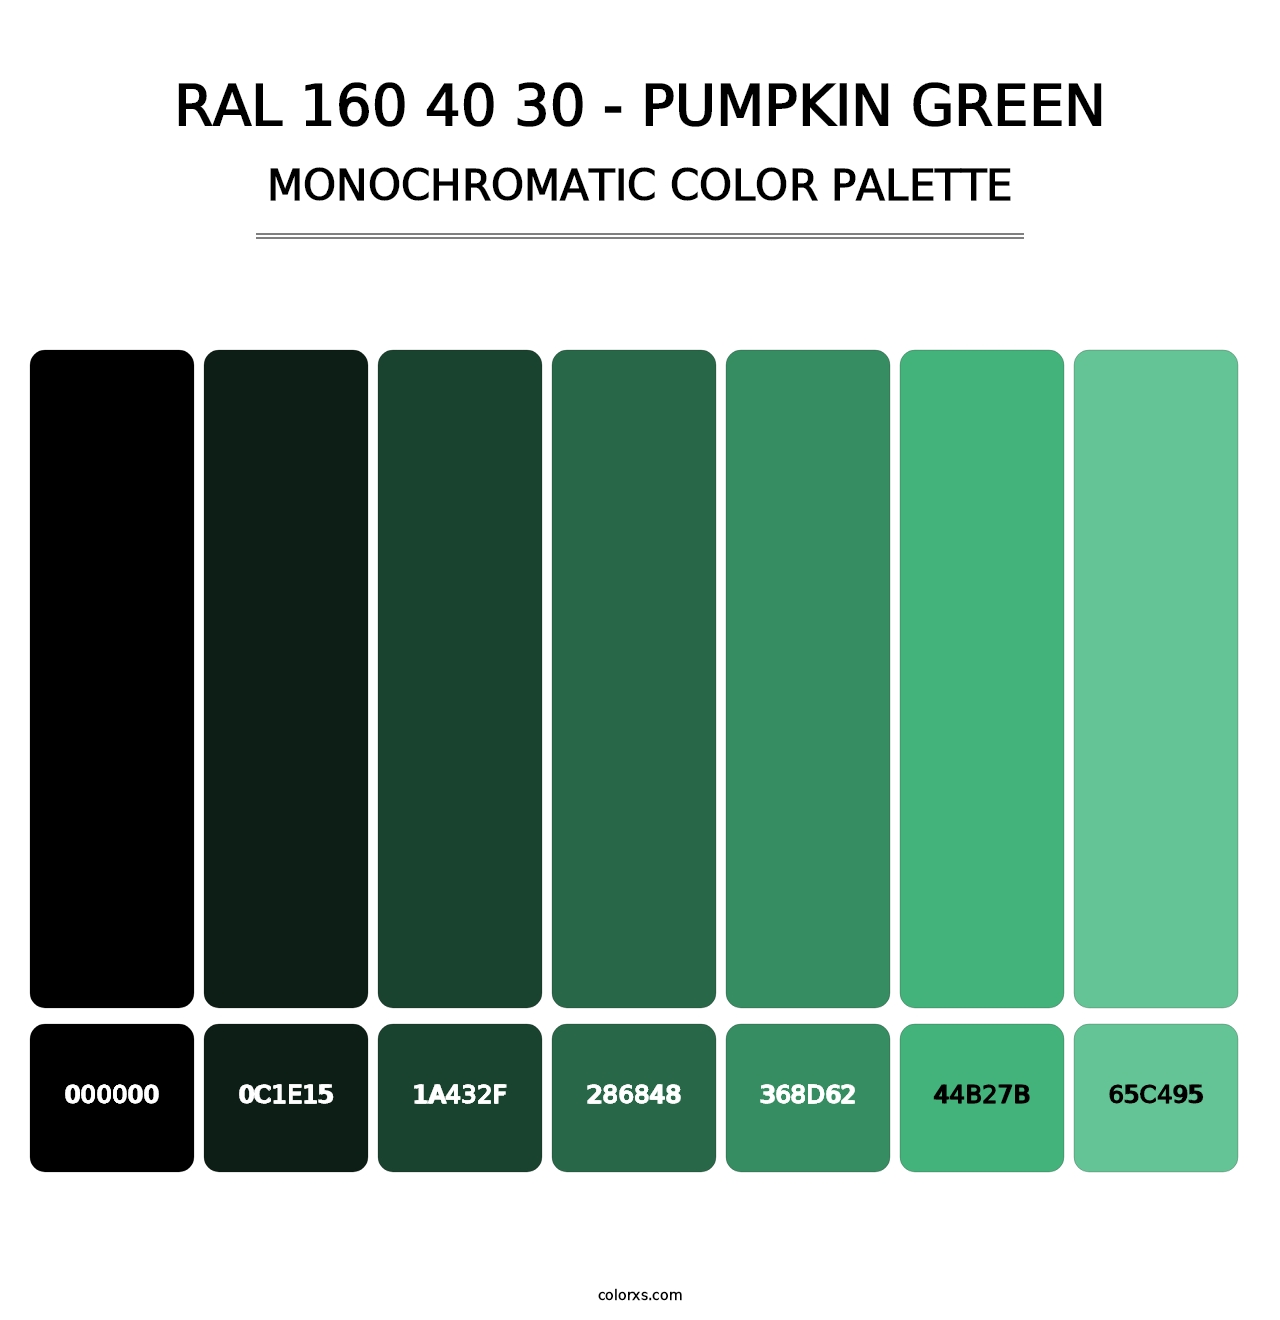 RAL 160 40 30 - Pumpkin Green - Monochromatic Color Palette